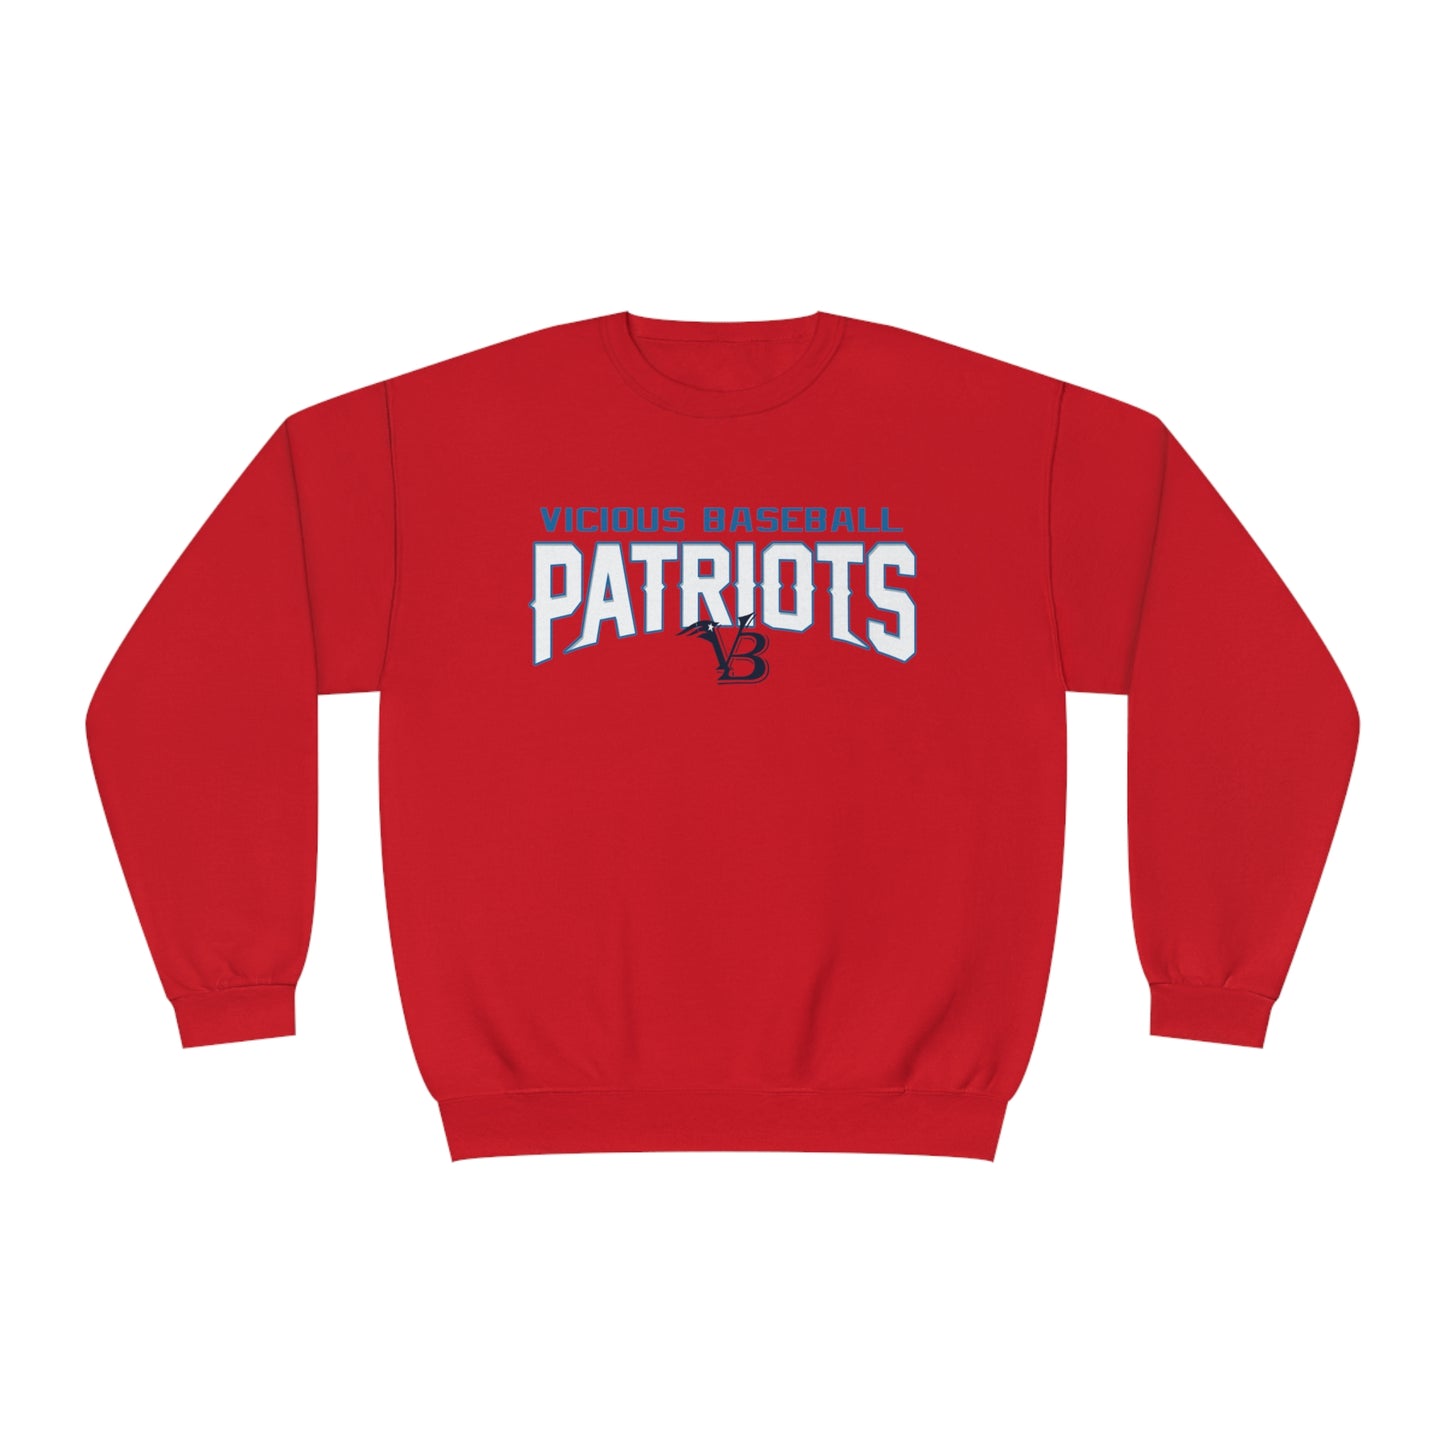 VB Patriots NuBlend® Crewneck Sweatshirt